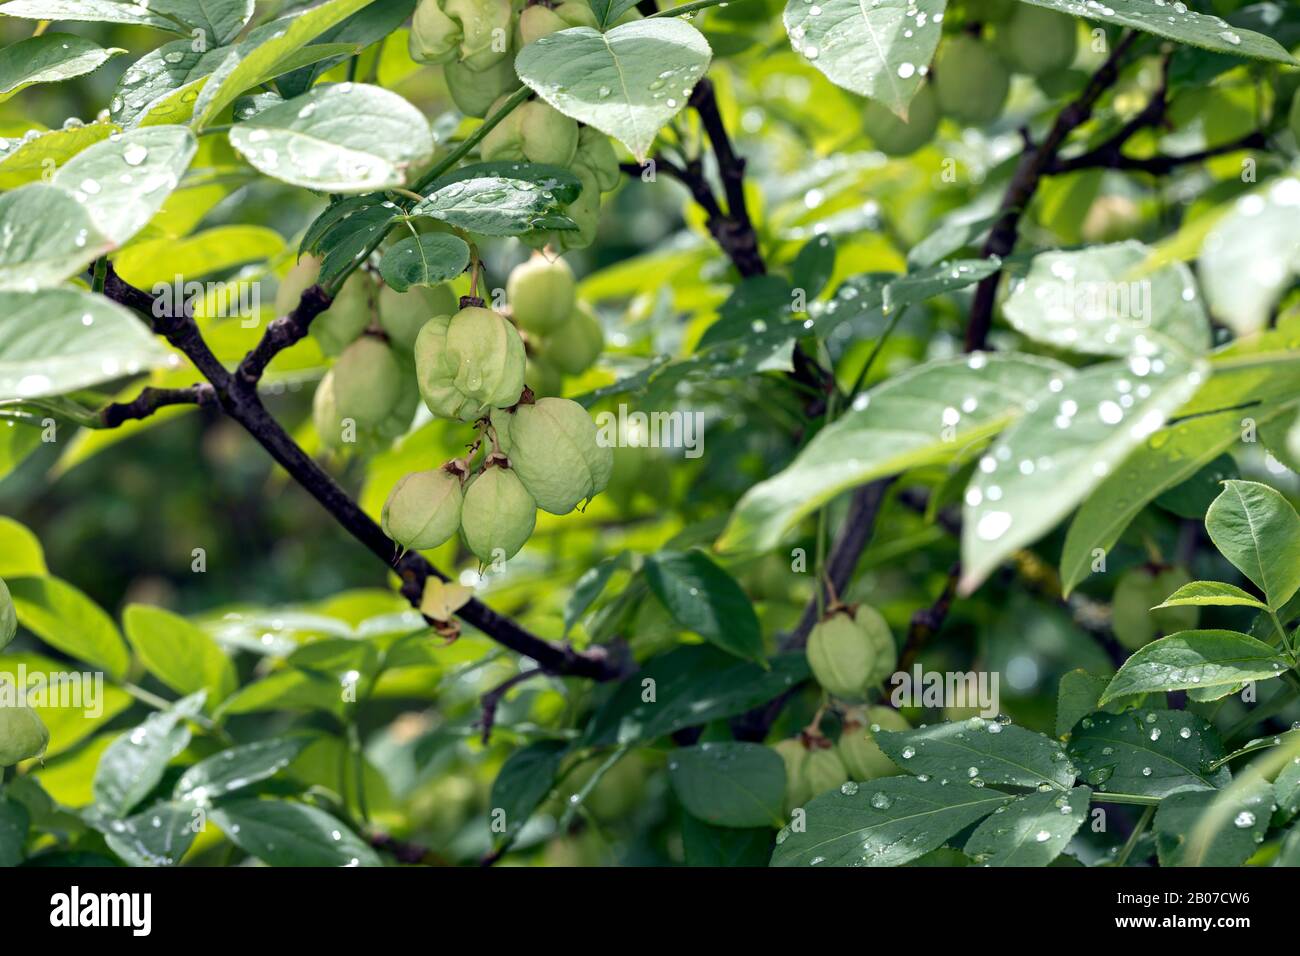 Bladdernut, European Bladdernut (Staphylea pinnata, Staphylaea pinnata), branch with fruits, Germany Stock Photo